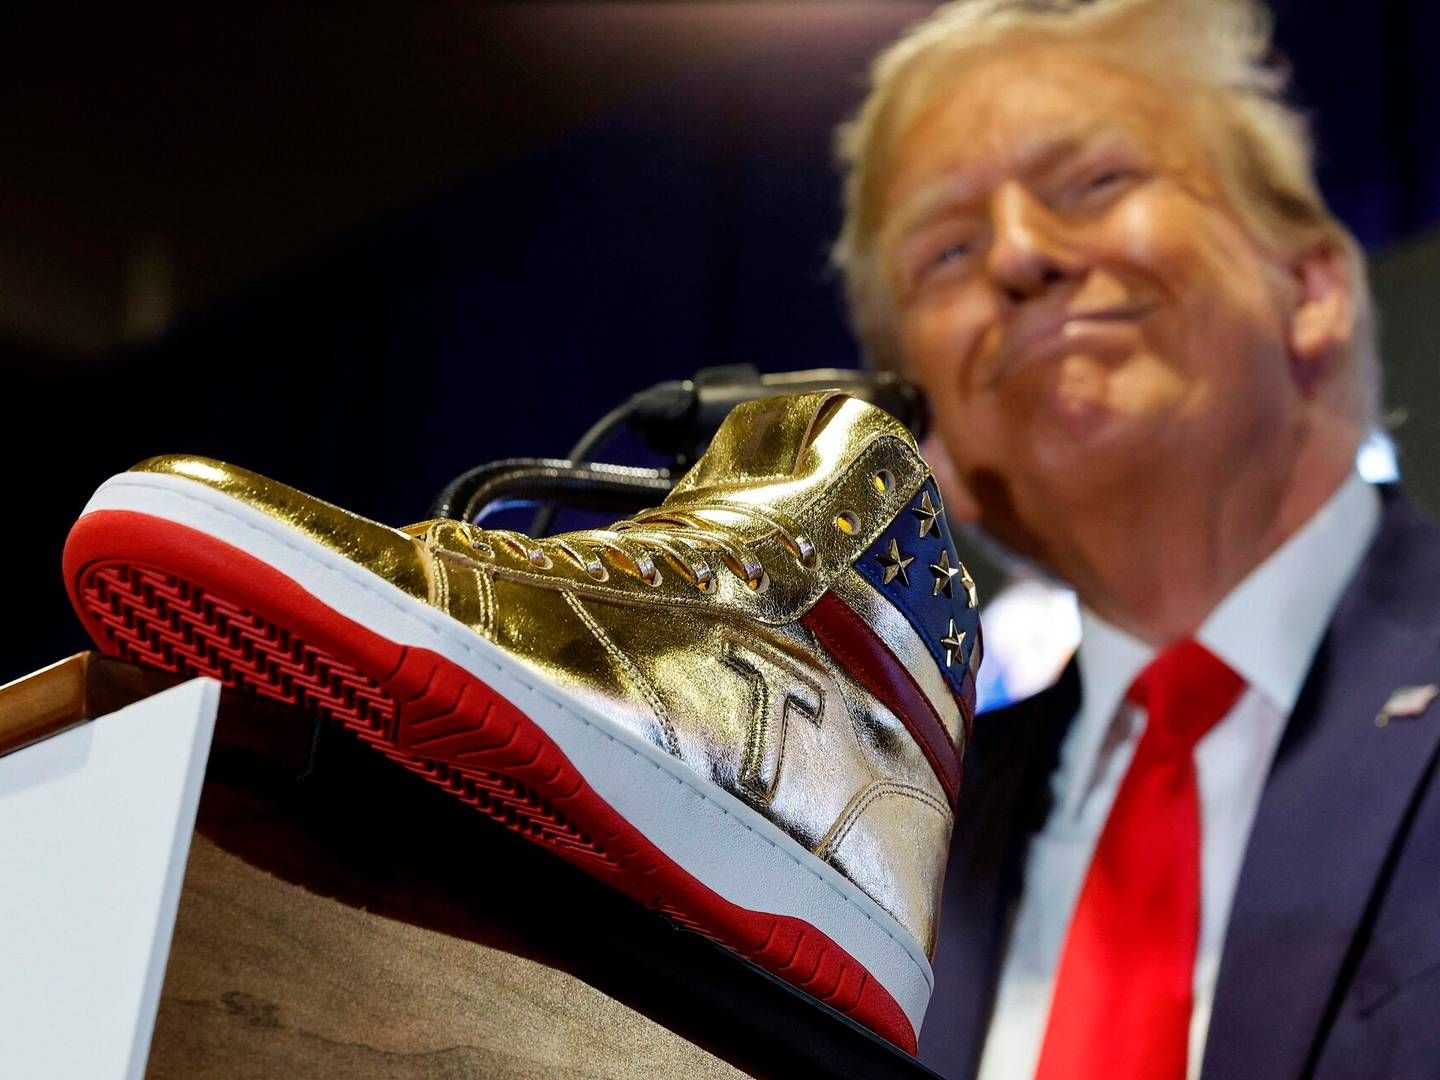 Donald Trump med de gyldne 'Never surrender'-sneakers til Sneaker Con i Philadelphia, Pennsylvania lørdag. | Foto: Chip Somodevilla/AFP/Ritzau Scanpix